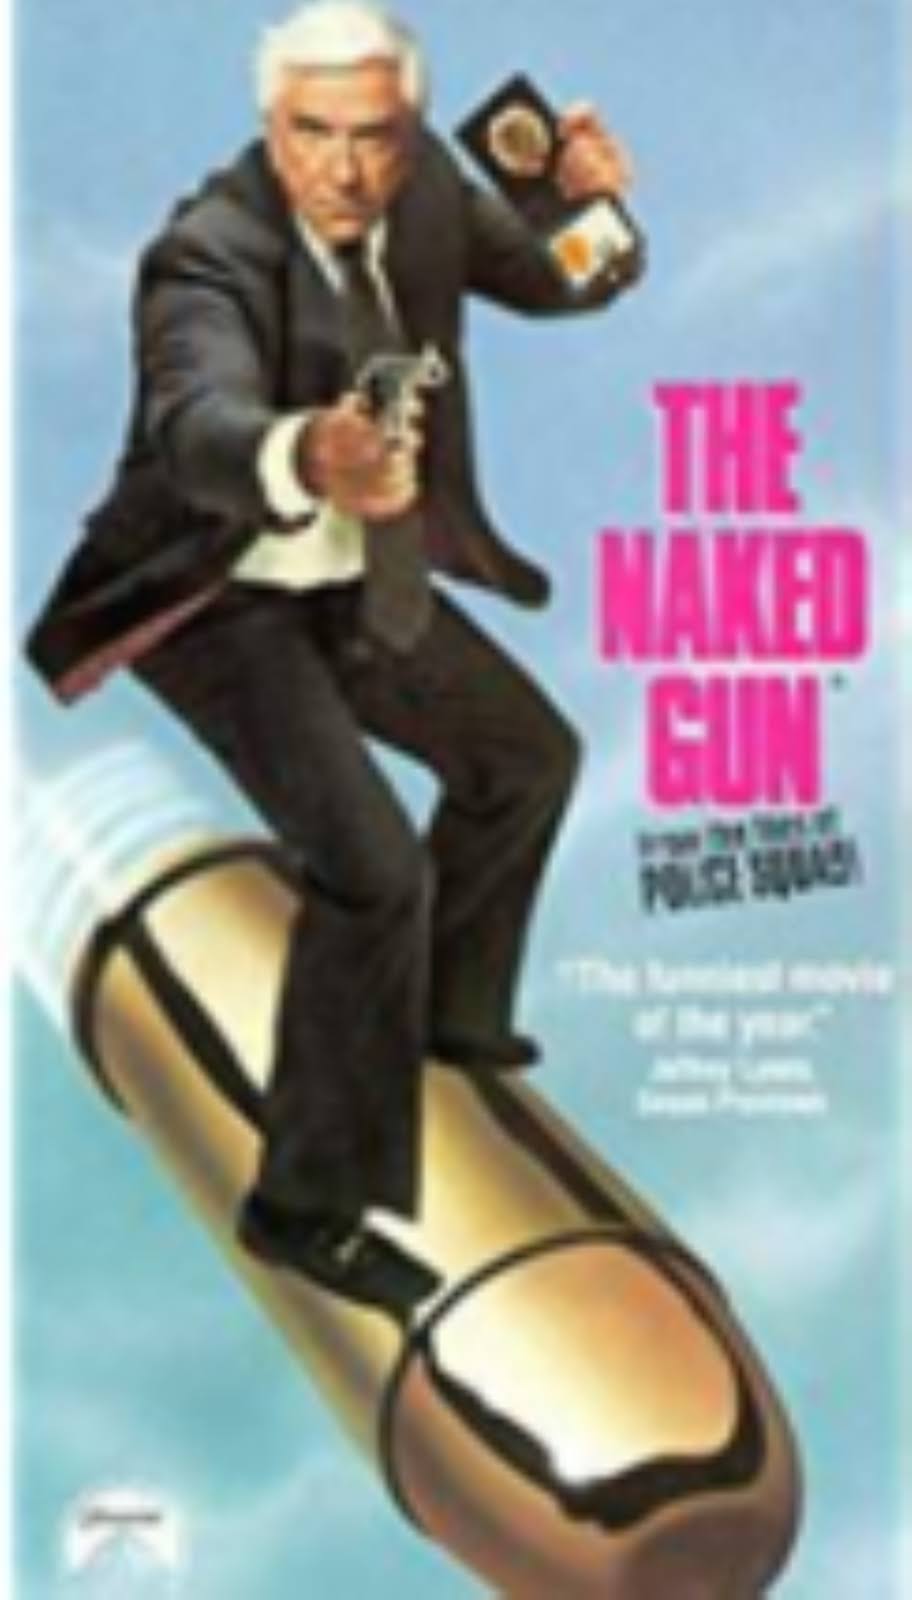 The Naked Gun VHS